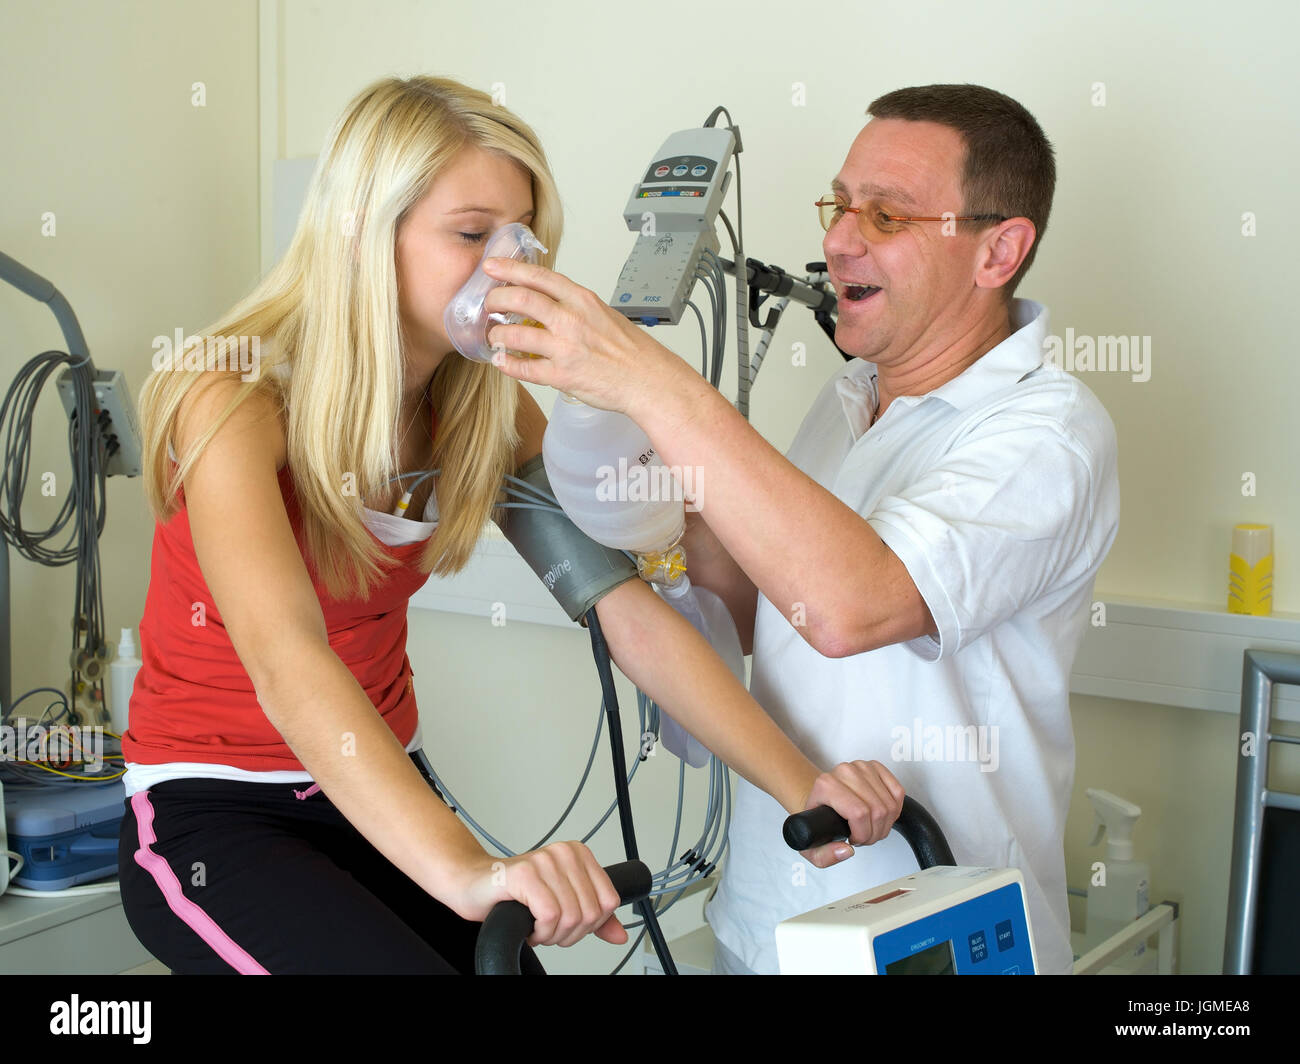 Giovane donna svolge un ergometro test nella pratica medica - una giovane donna su un ergometro in chirurgia, Junge Frau fuÃàhrt einen Ergometer-Tes Foto Stock